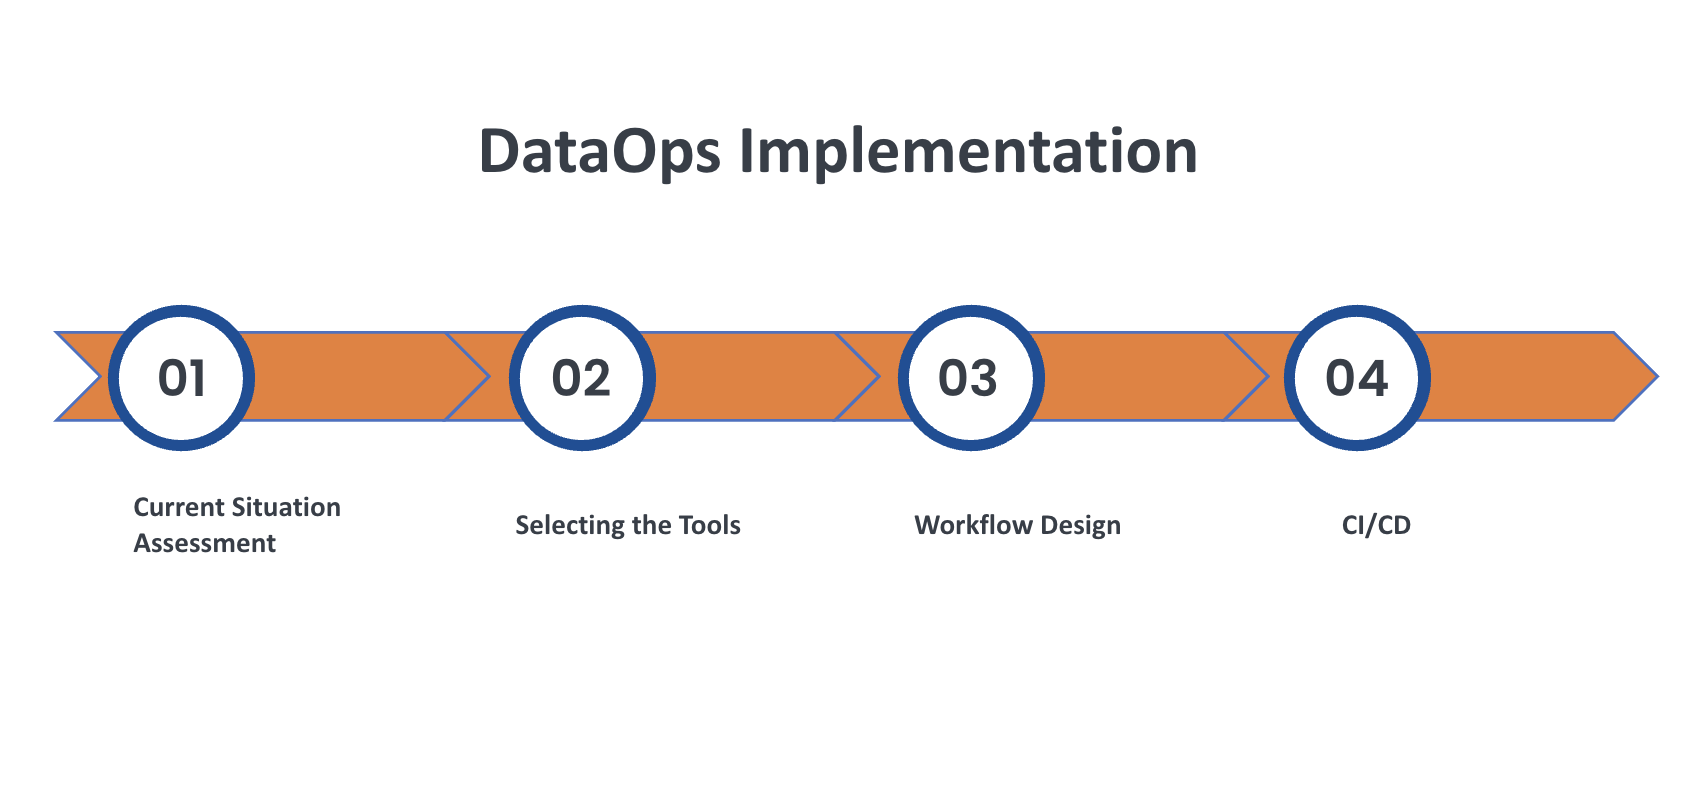 DataOps Implementation Process